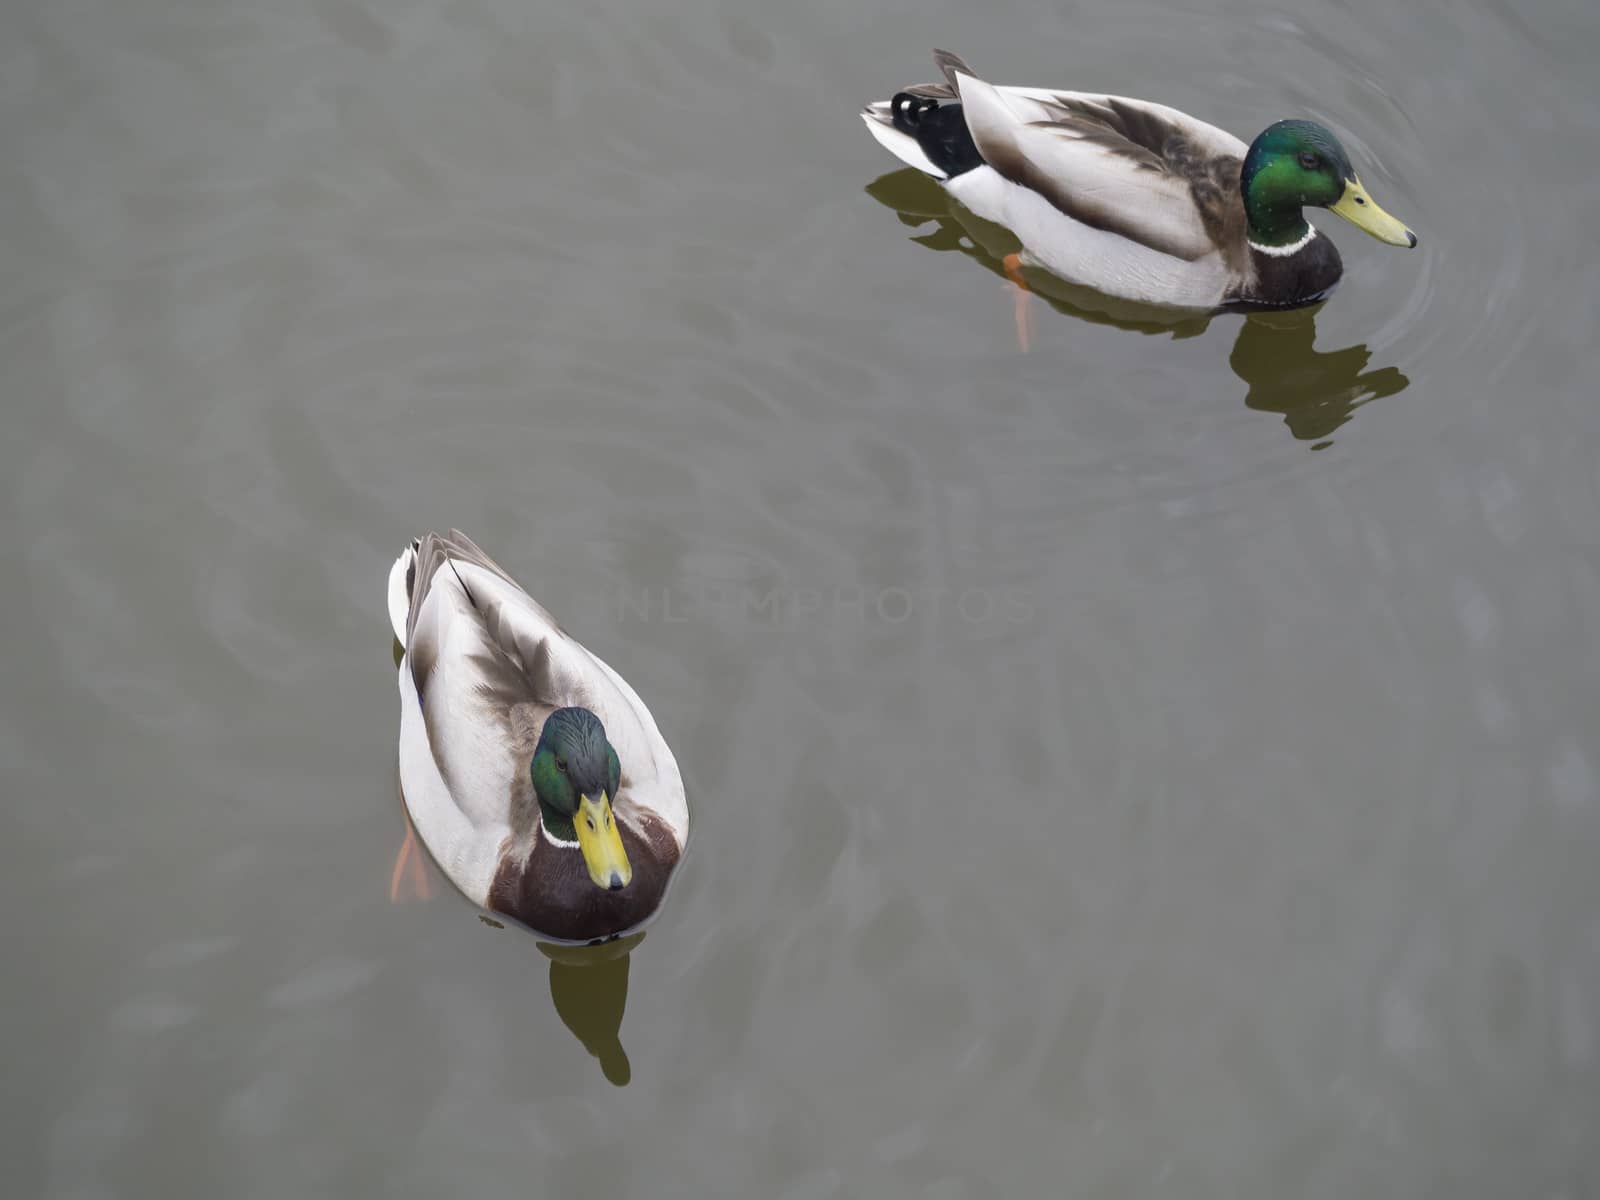 two widgeon drake duck swiminng on water suface.